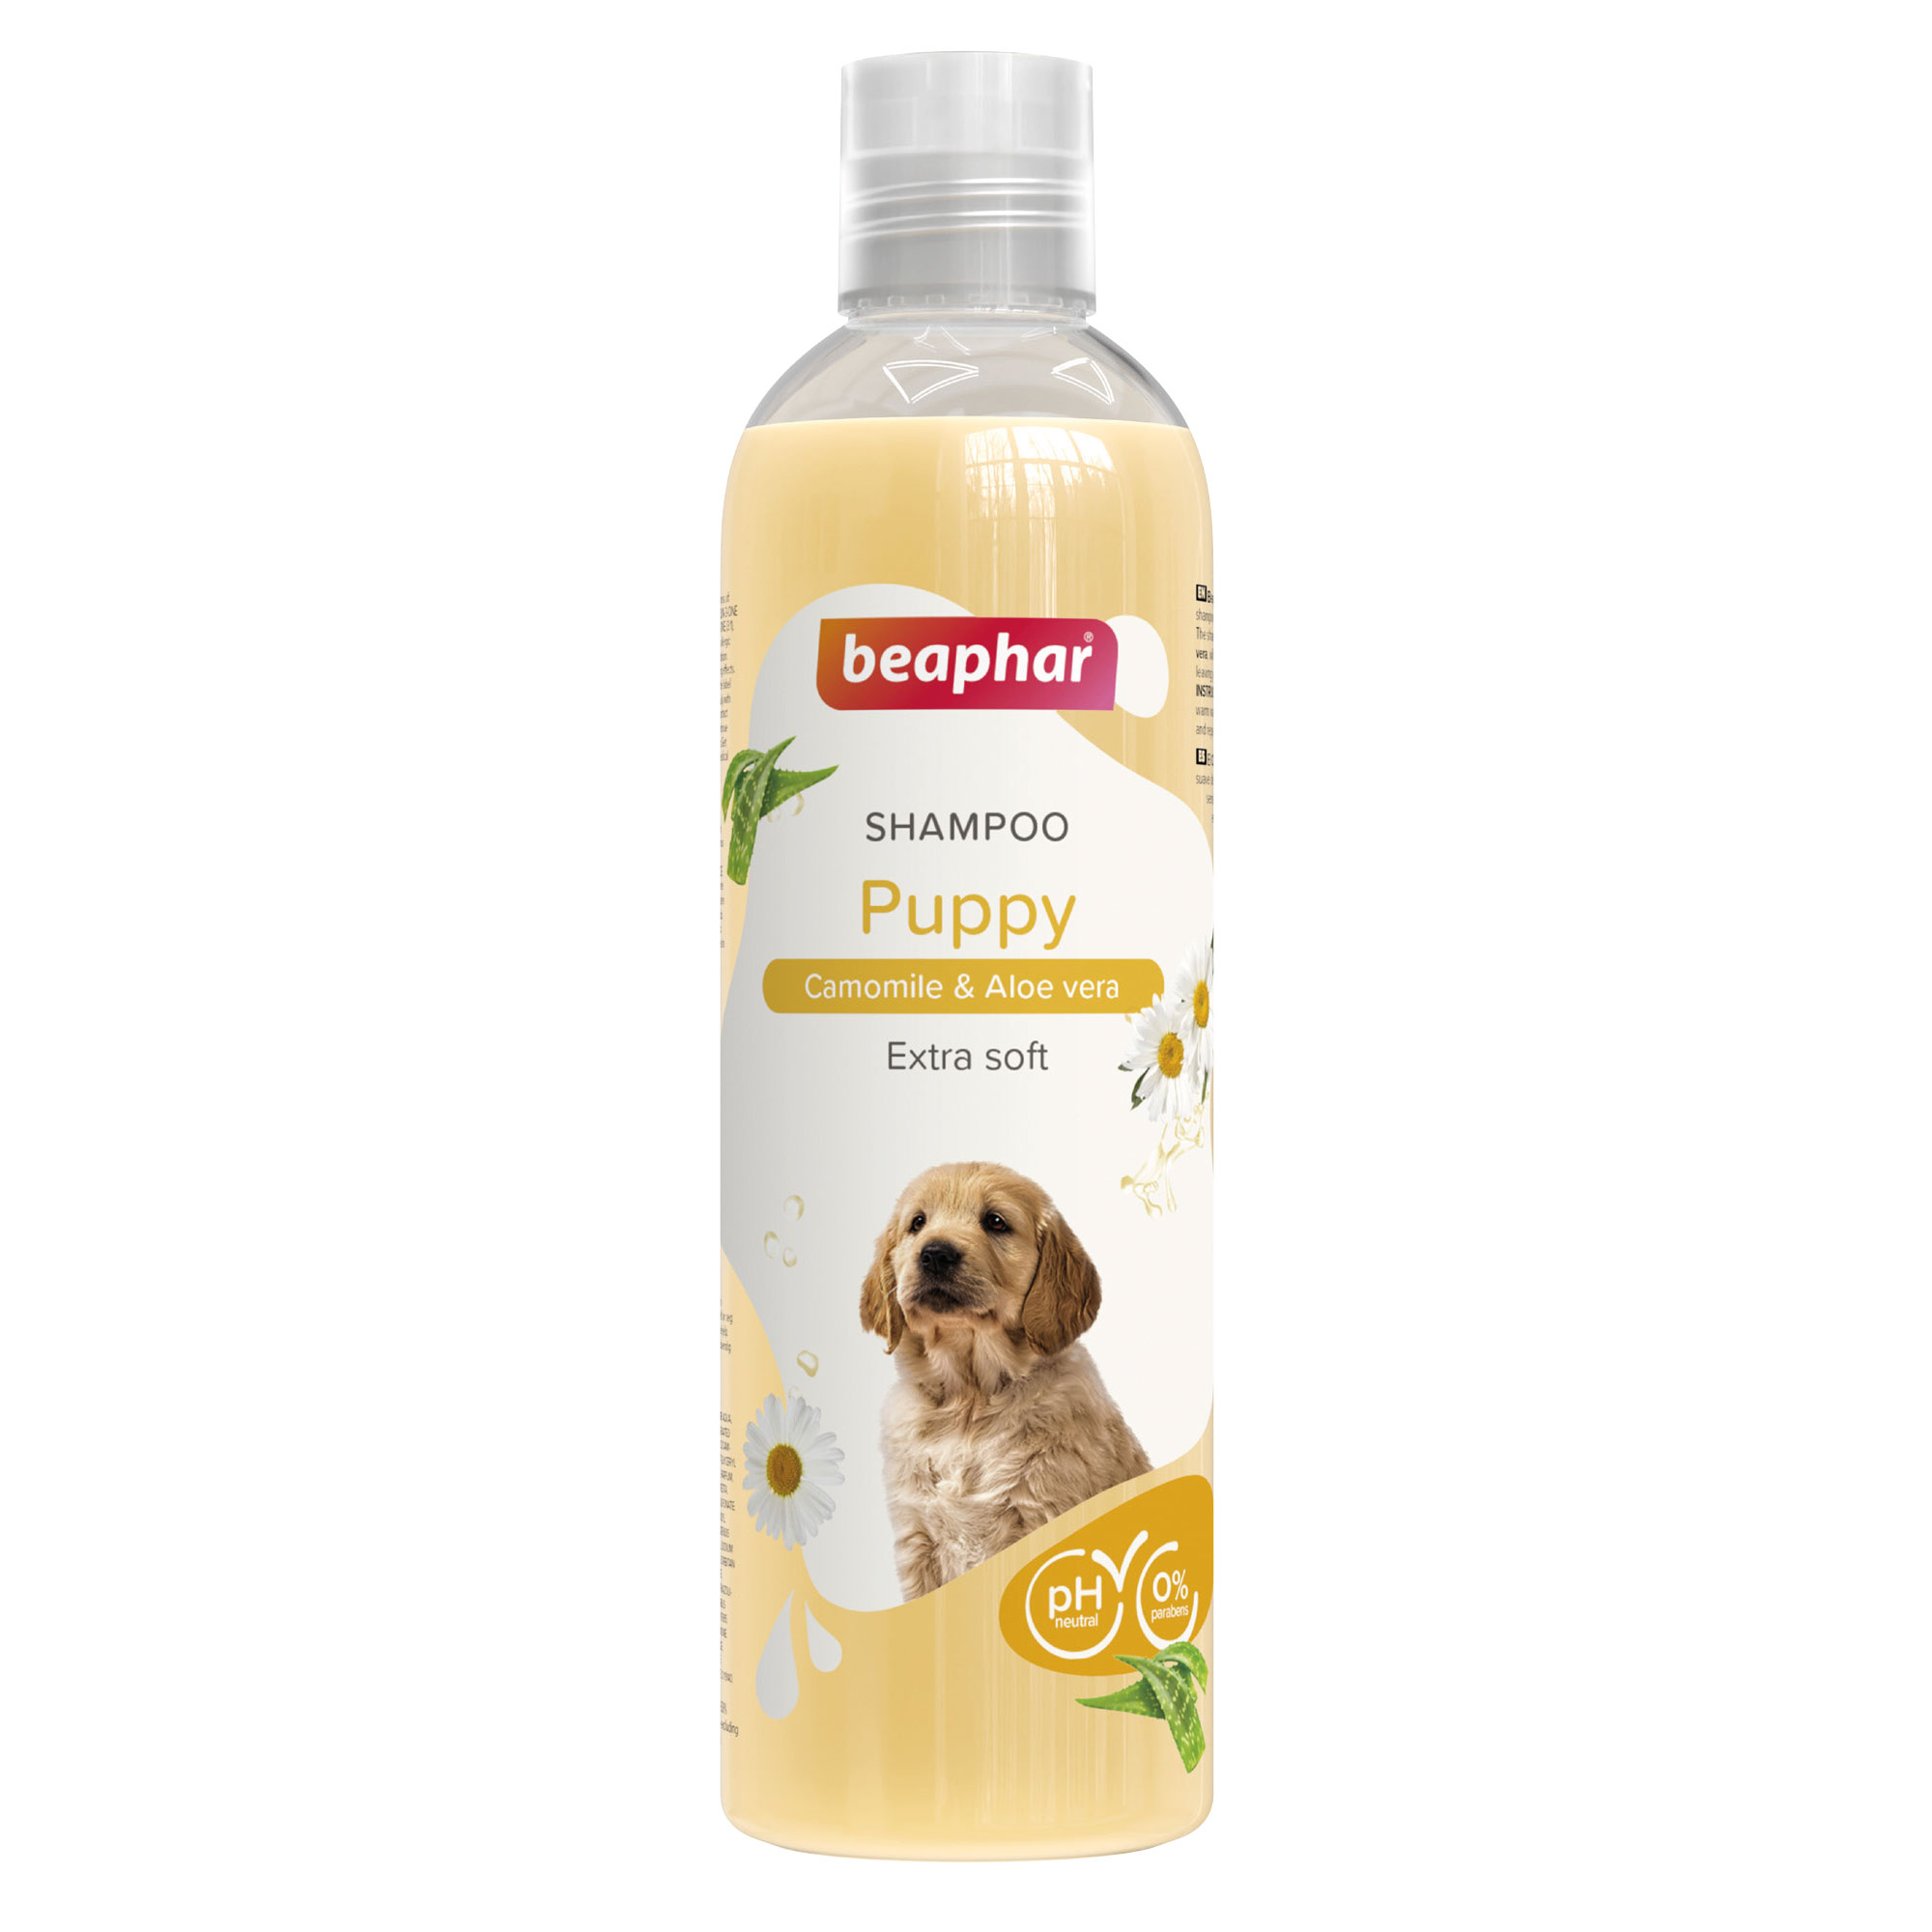 Beaphar Shampoo Puppy Dog 